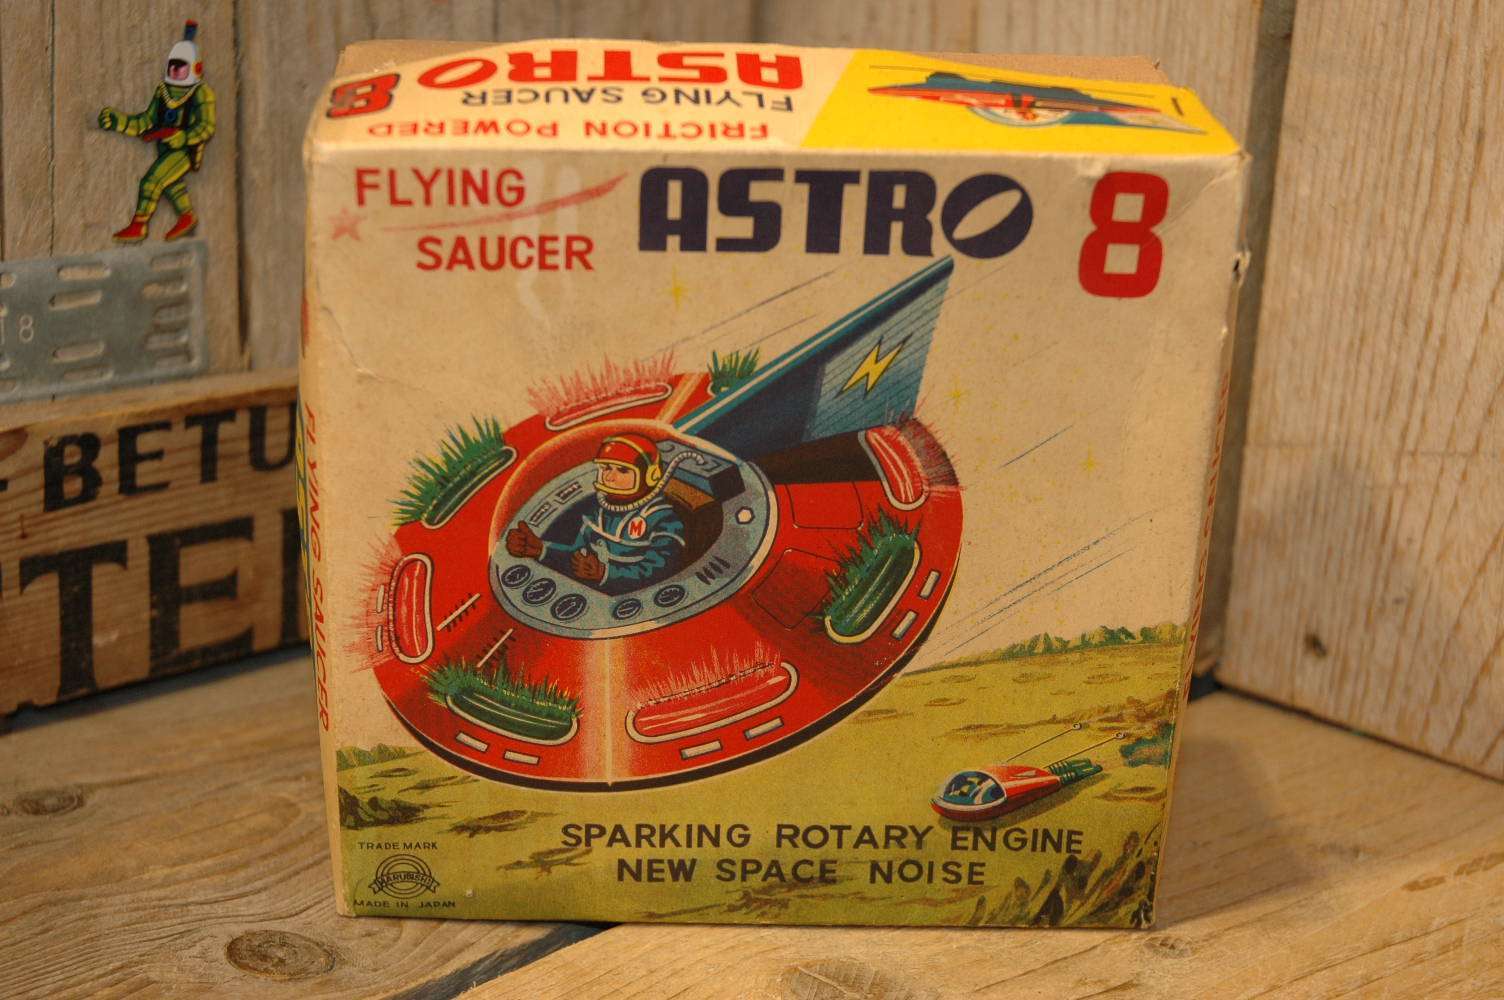 Marubishi - Astro 8 Flying Saucer